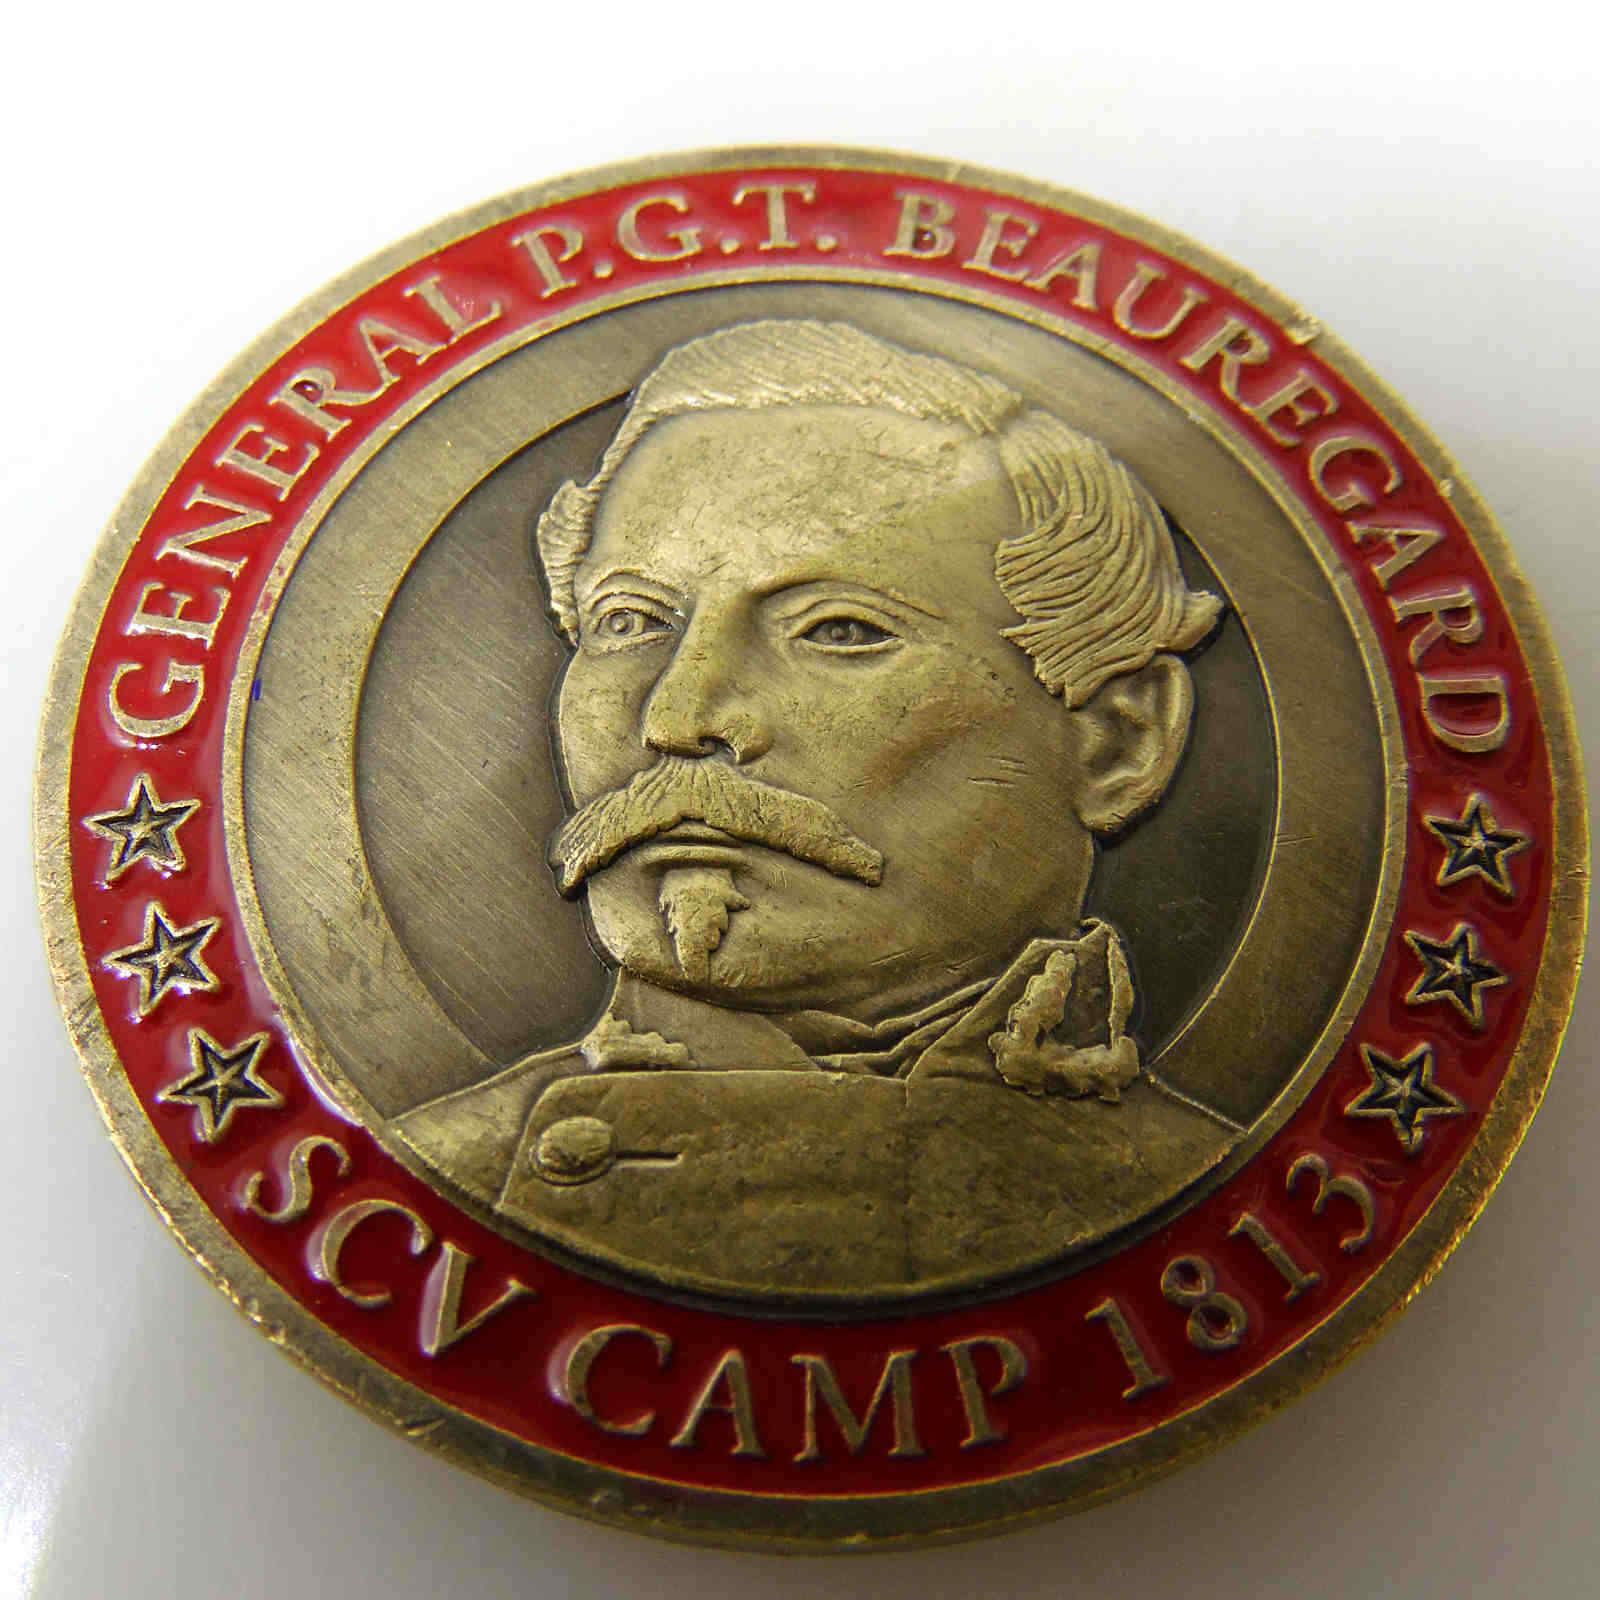 GENERAL P.G.T. BEAUREGARD CHALLENGE COIN